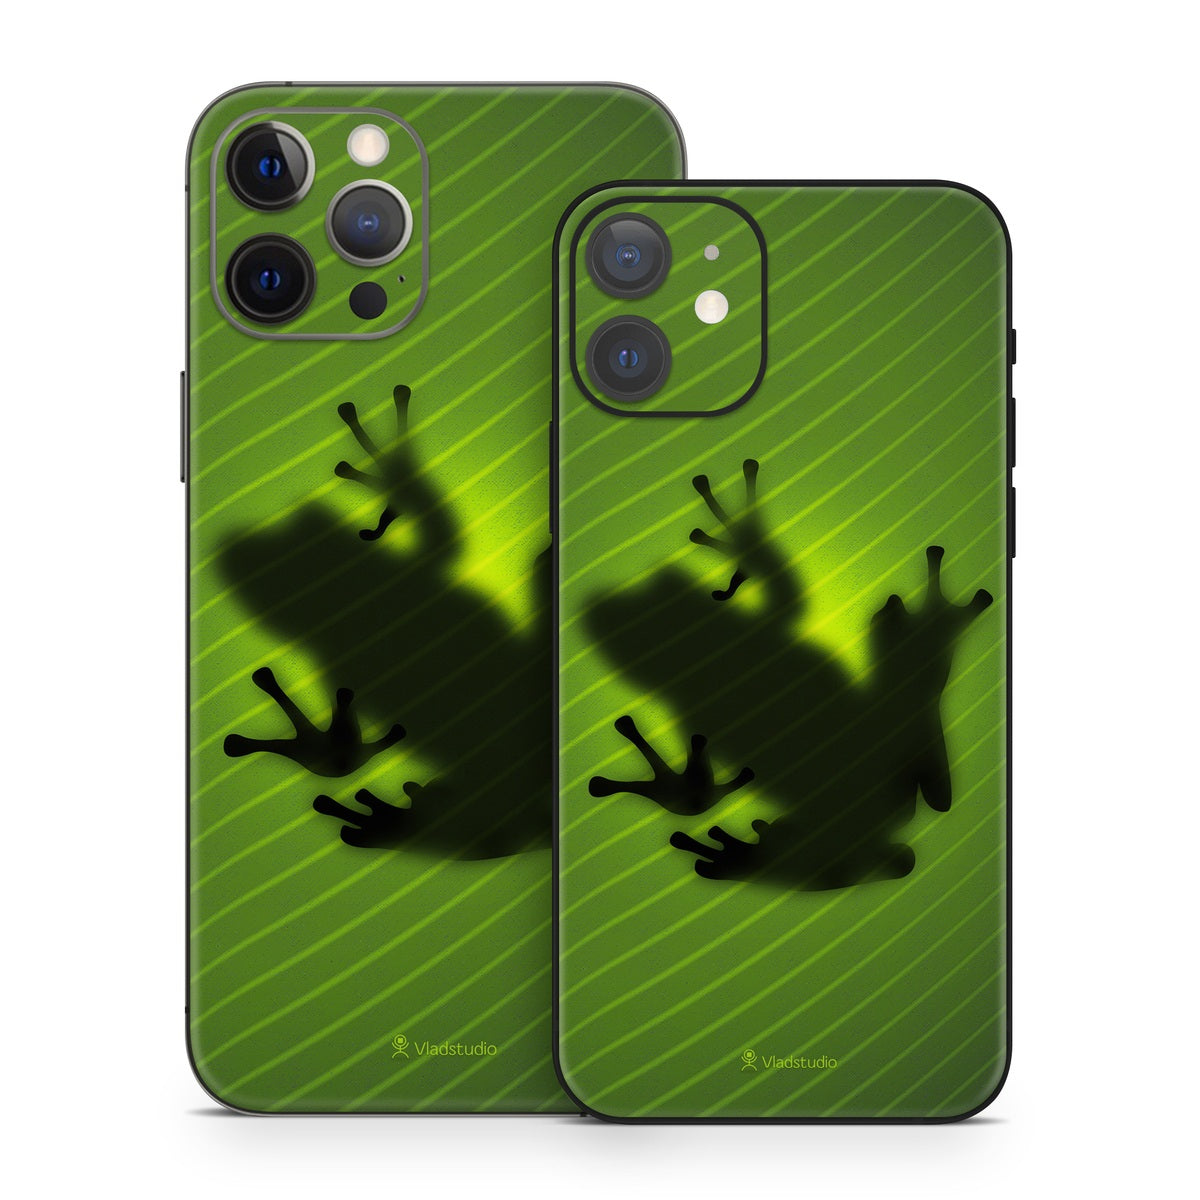 Frog - Apple iPhone 12 Skin